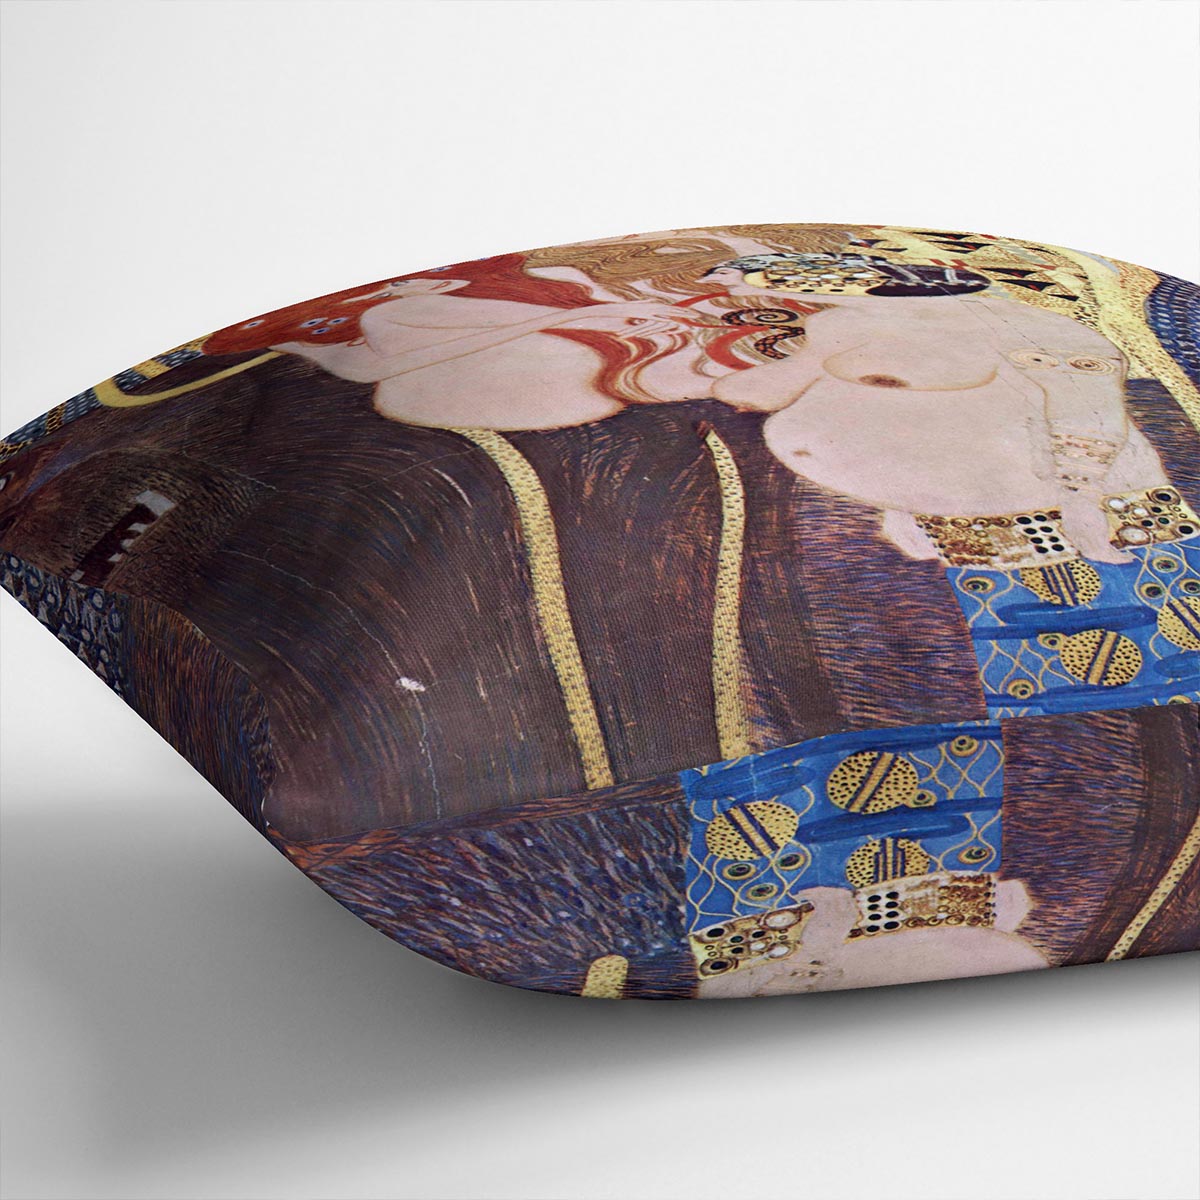 The Beethoven Freize 2 by Klimt Cushion